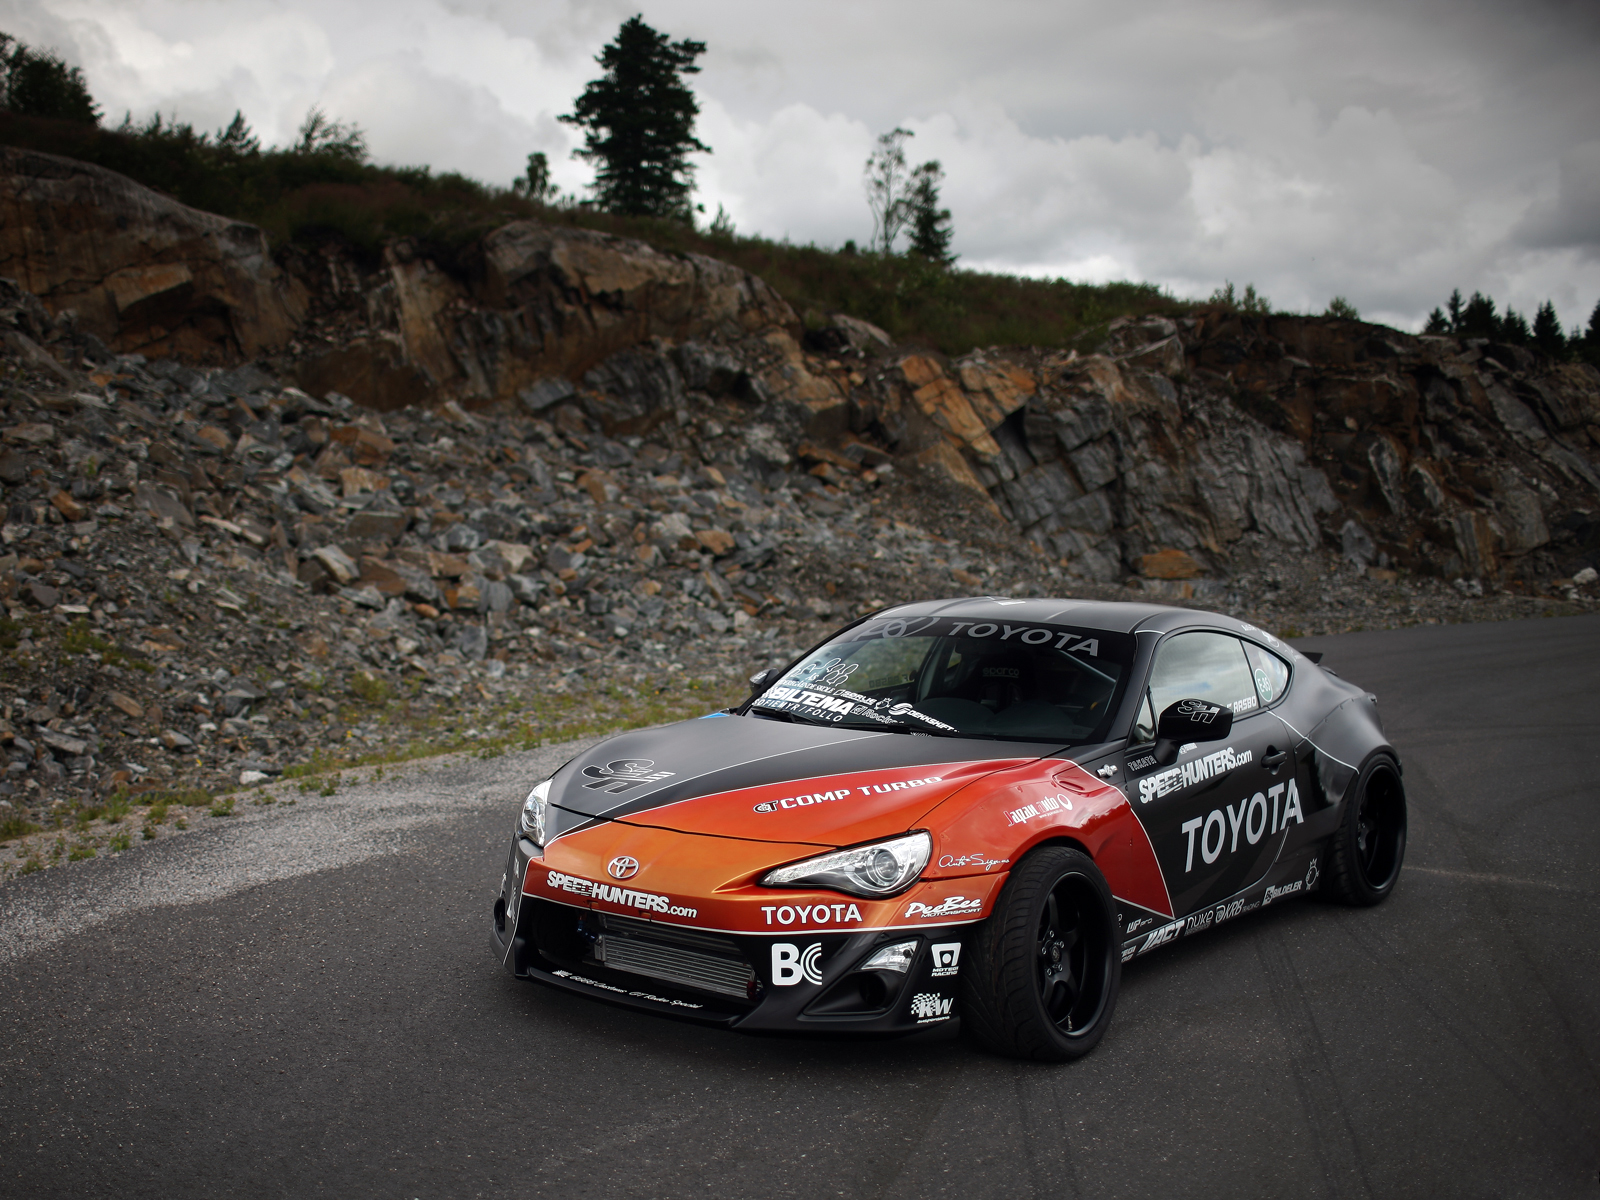 2012, Speedhunters, Toyota, 86 x, Drift, Race, Racing Wallpaper